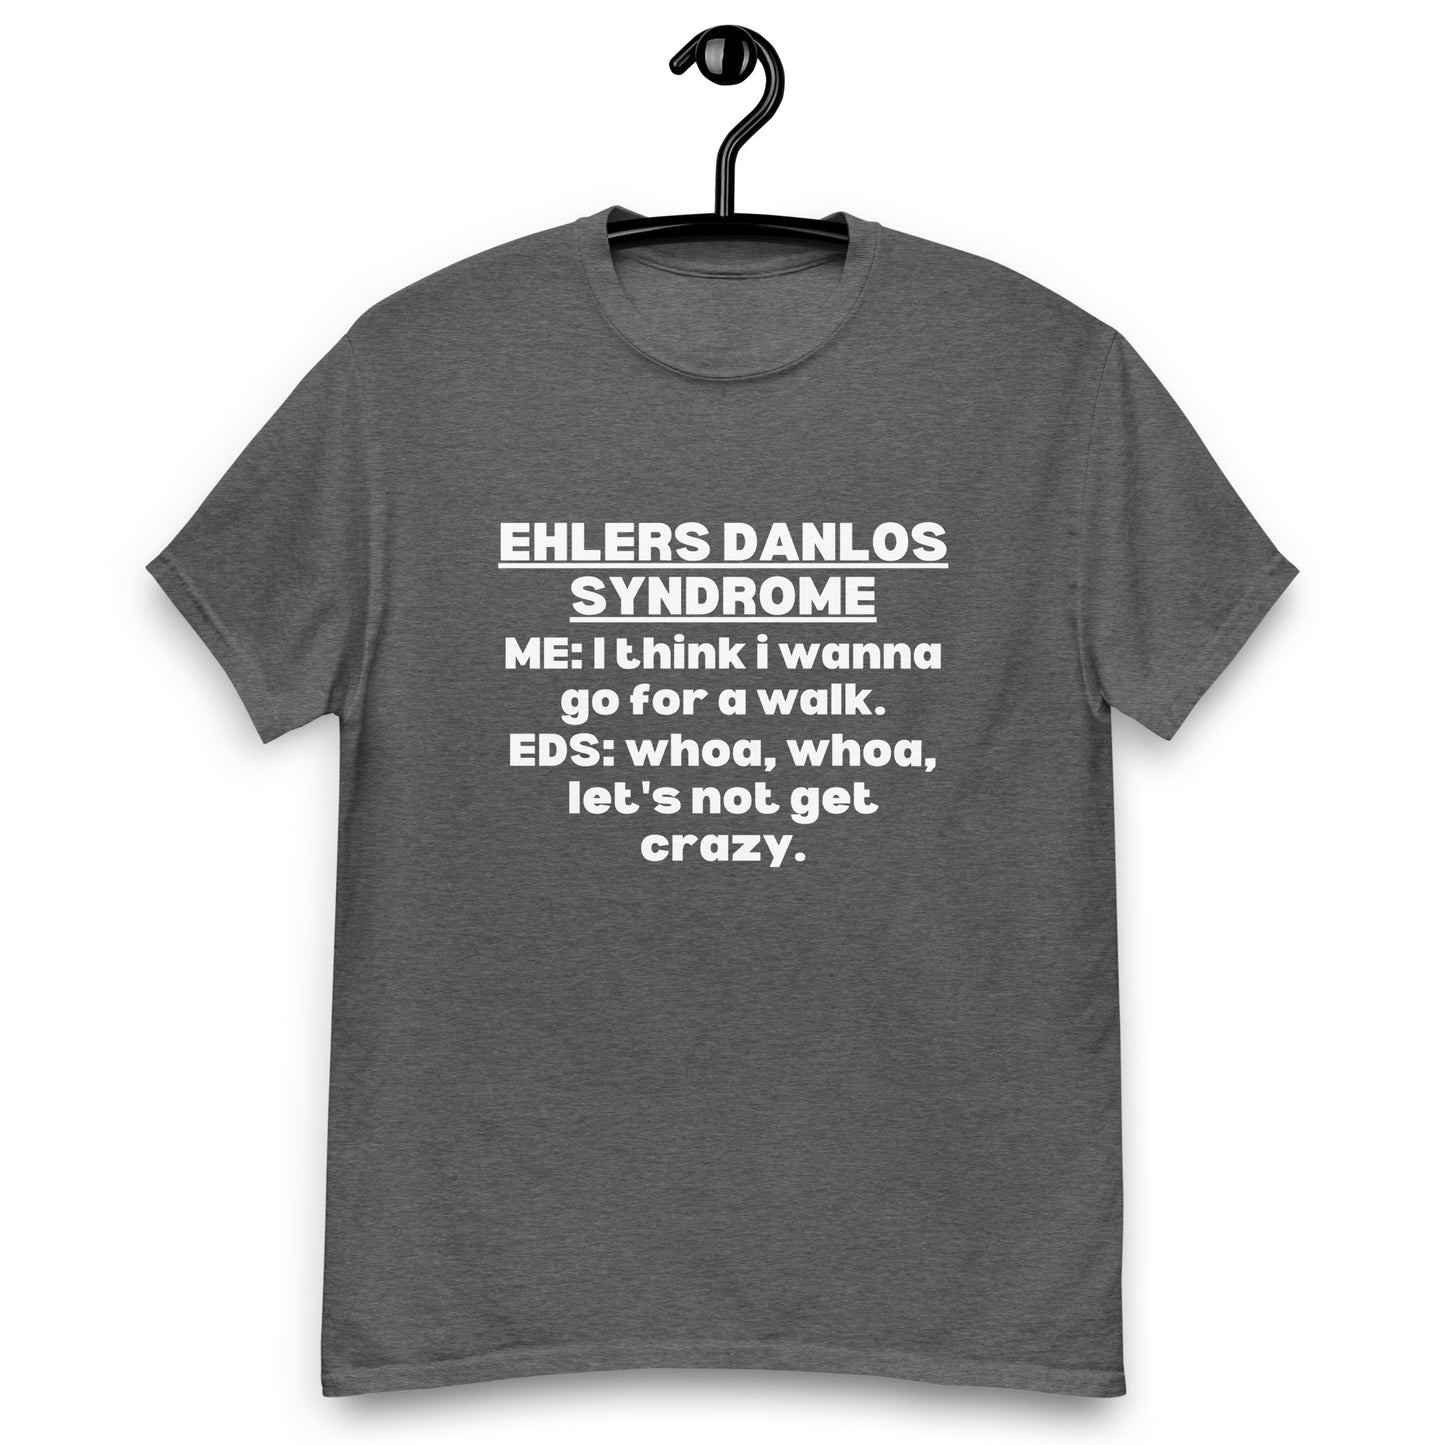 EDS Ehlers-Danlos syndromes warrior, Ehlers Danlos, Eds Awareness, Eds Gift, Ehlers Danlos Shirt, Eds Shirt